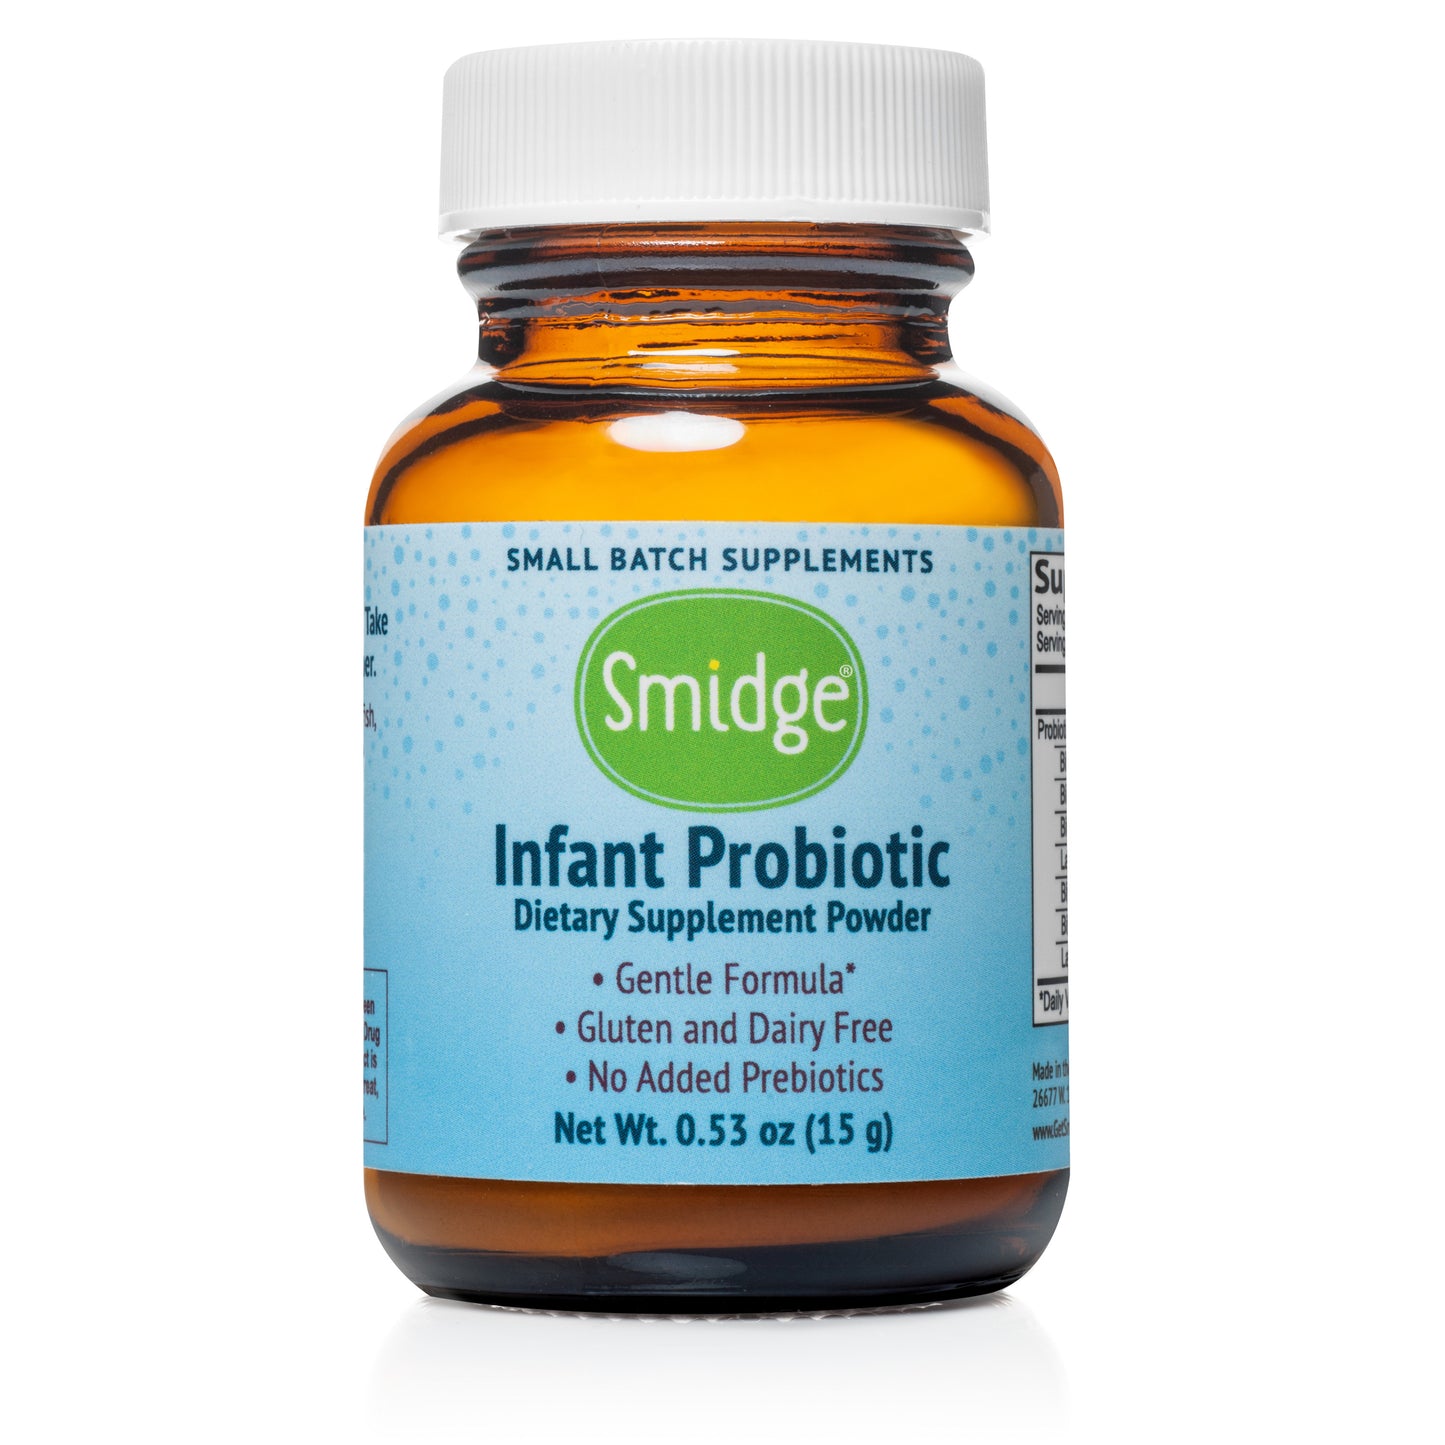 best probiotic  best probiotic for infants  probiotics for infants  probiotics  infant probiotics powder  probiotics supplement  probiotics powder  probiotic for infants  infant gut  probiotic  infant  gut  baby